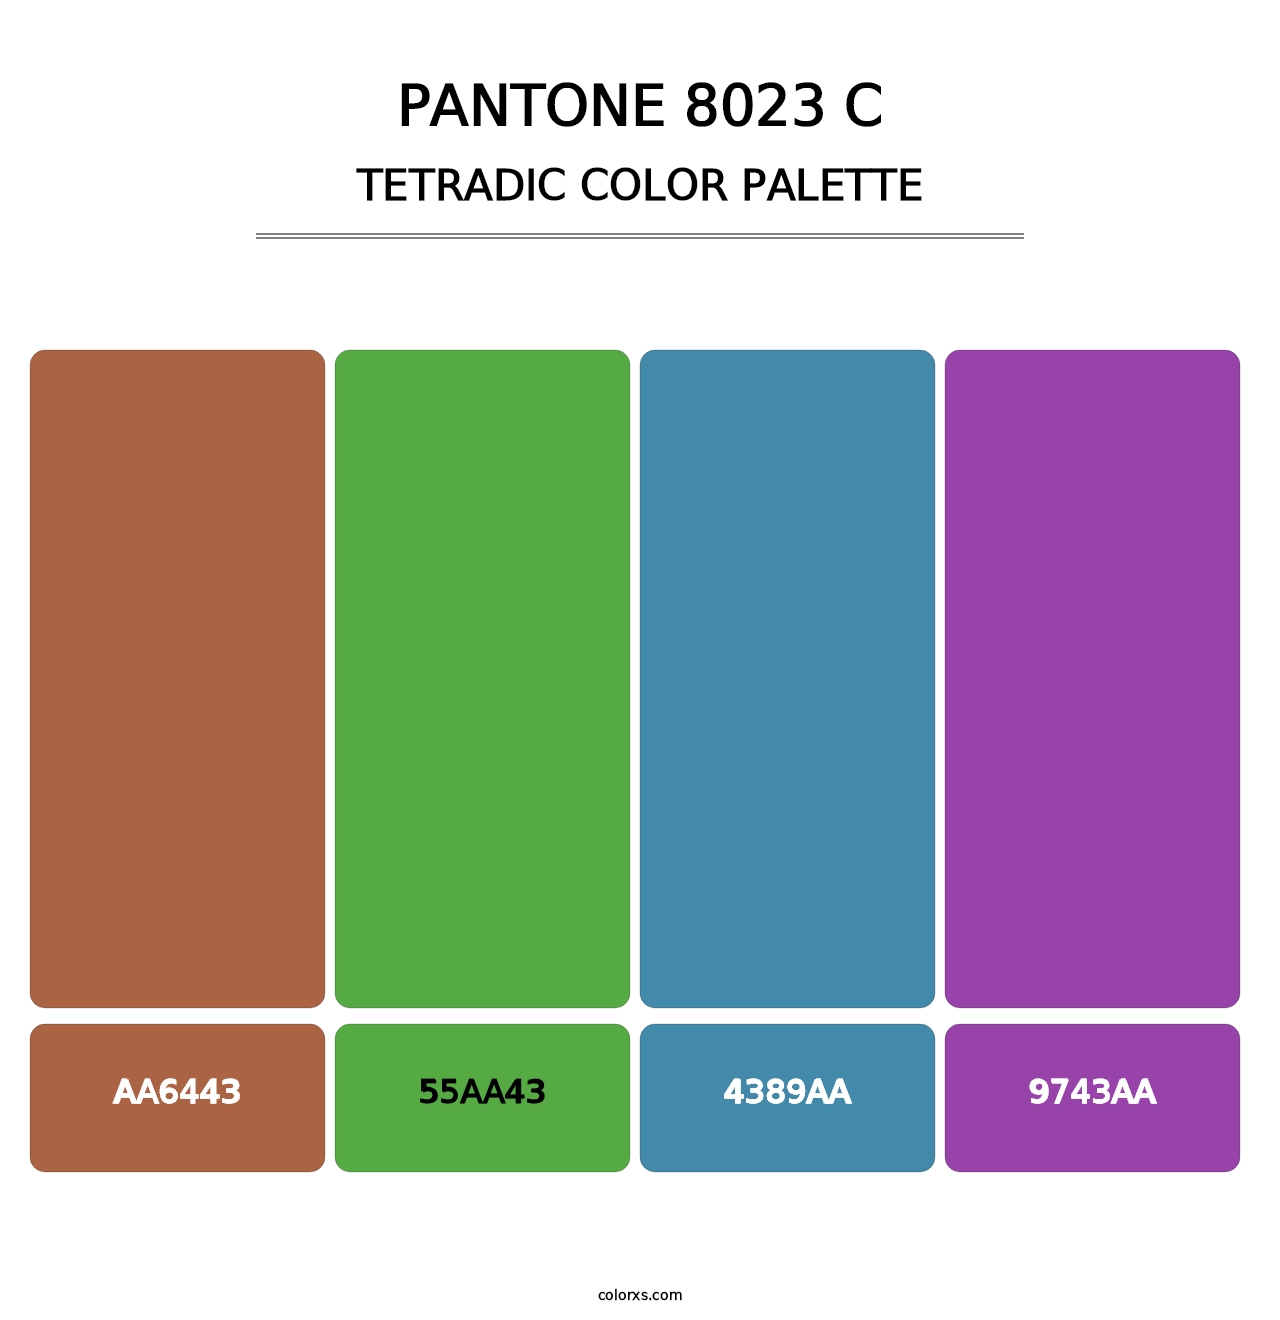 PANTONE 8023 C - Tetradic Color Palette